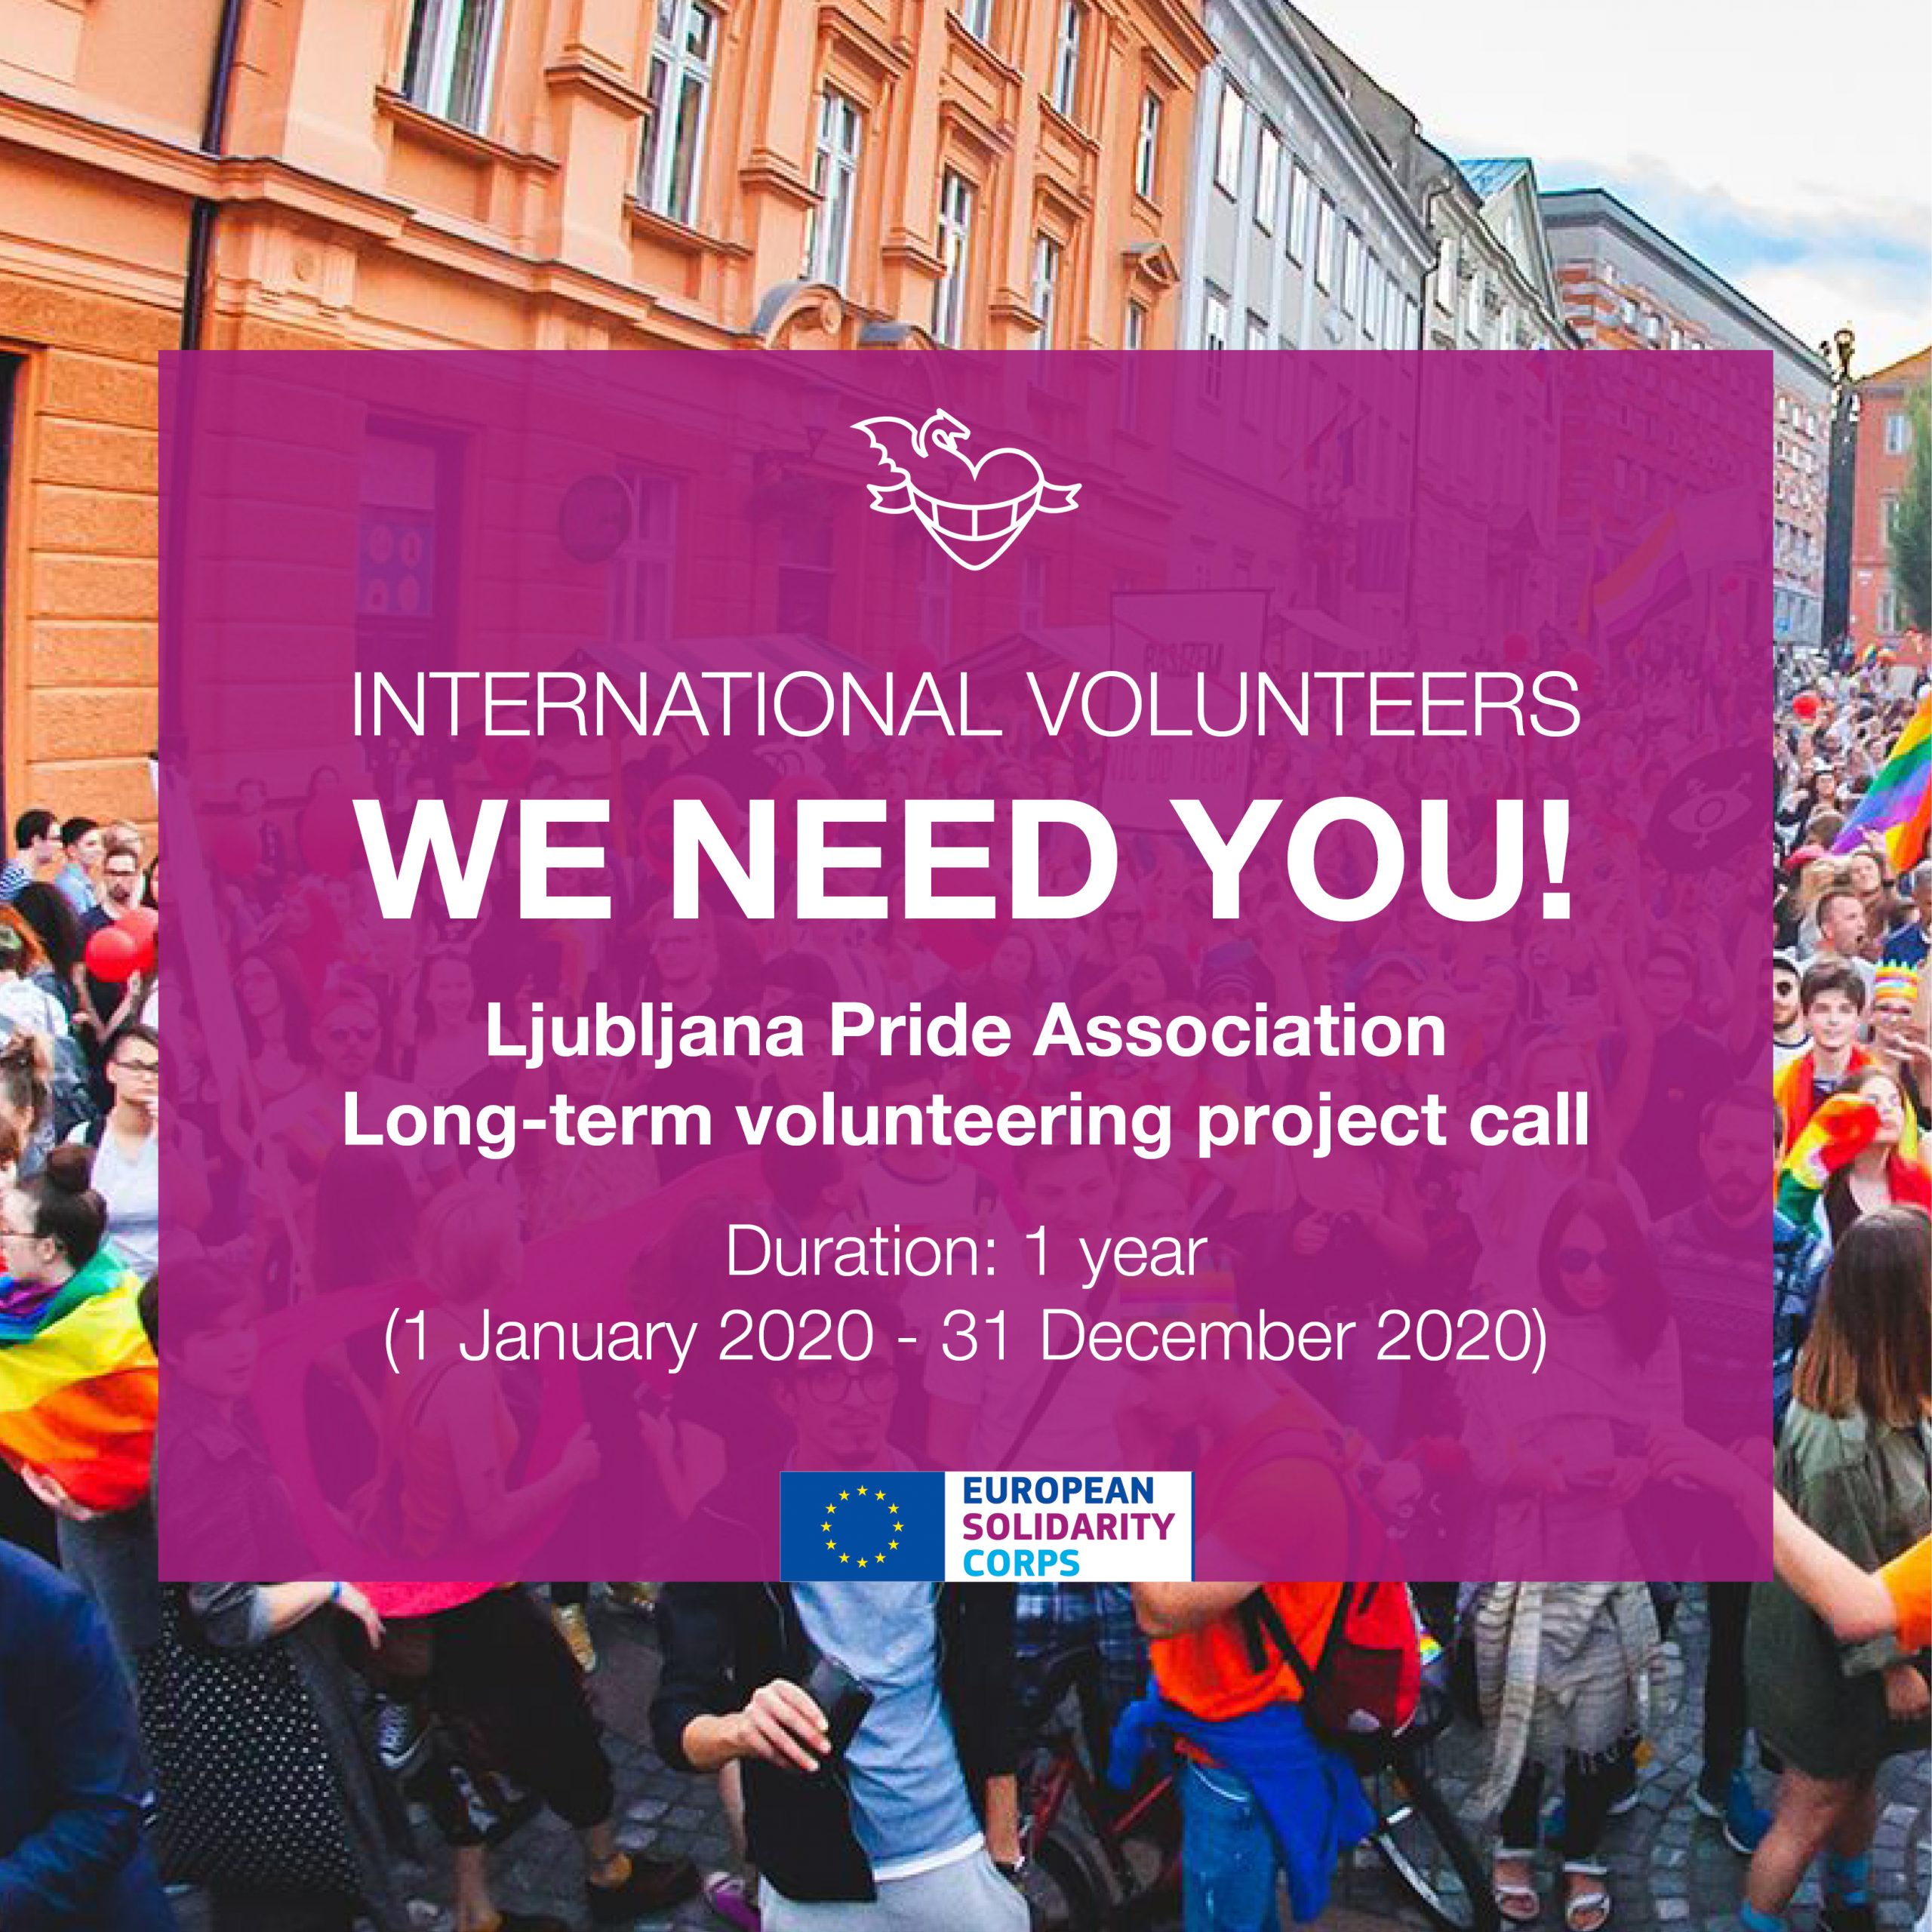 Ljubljana Pride Association Long-term volunteering project call